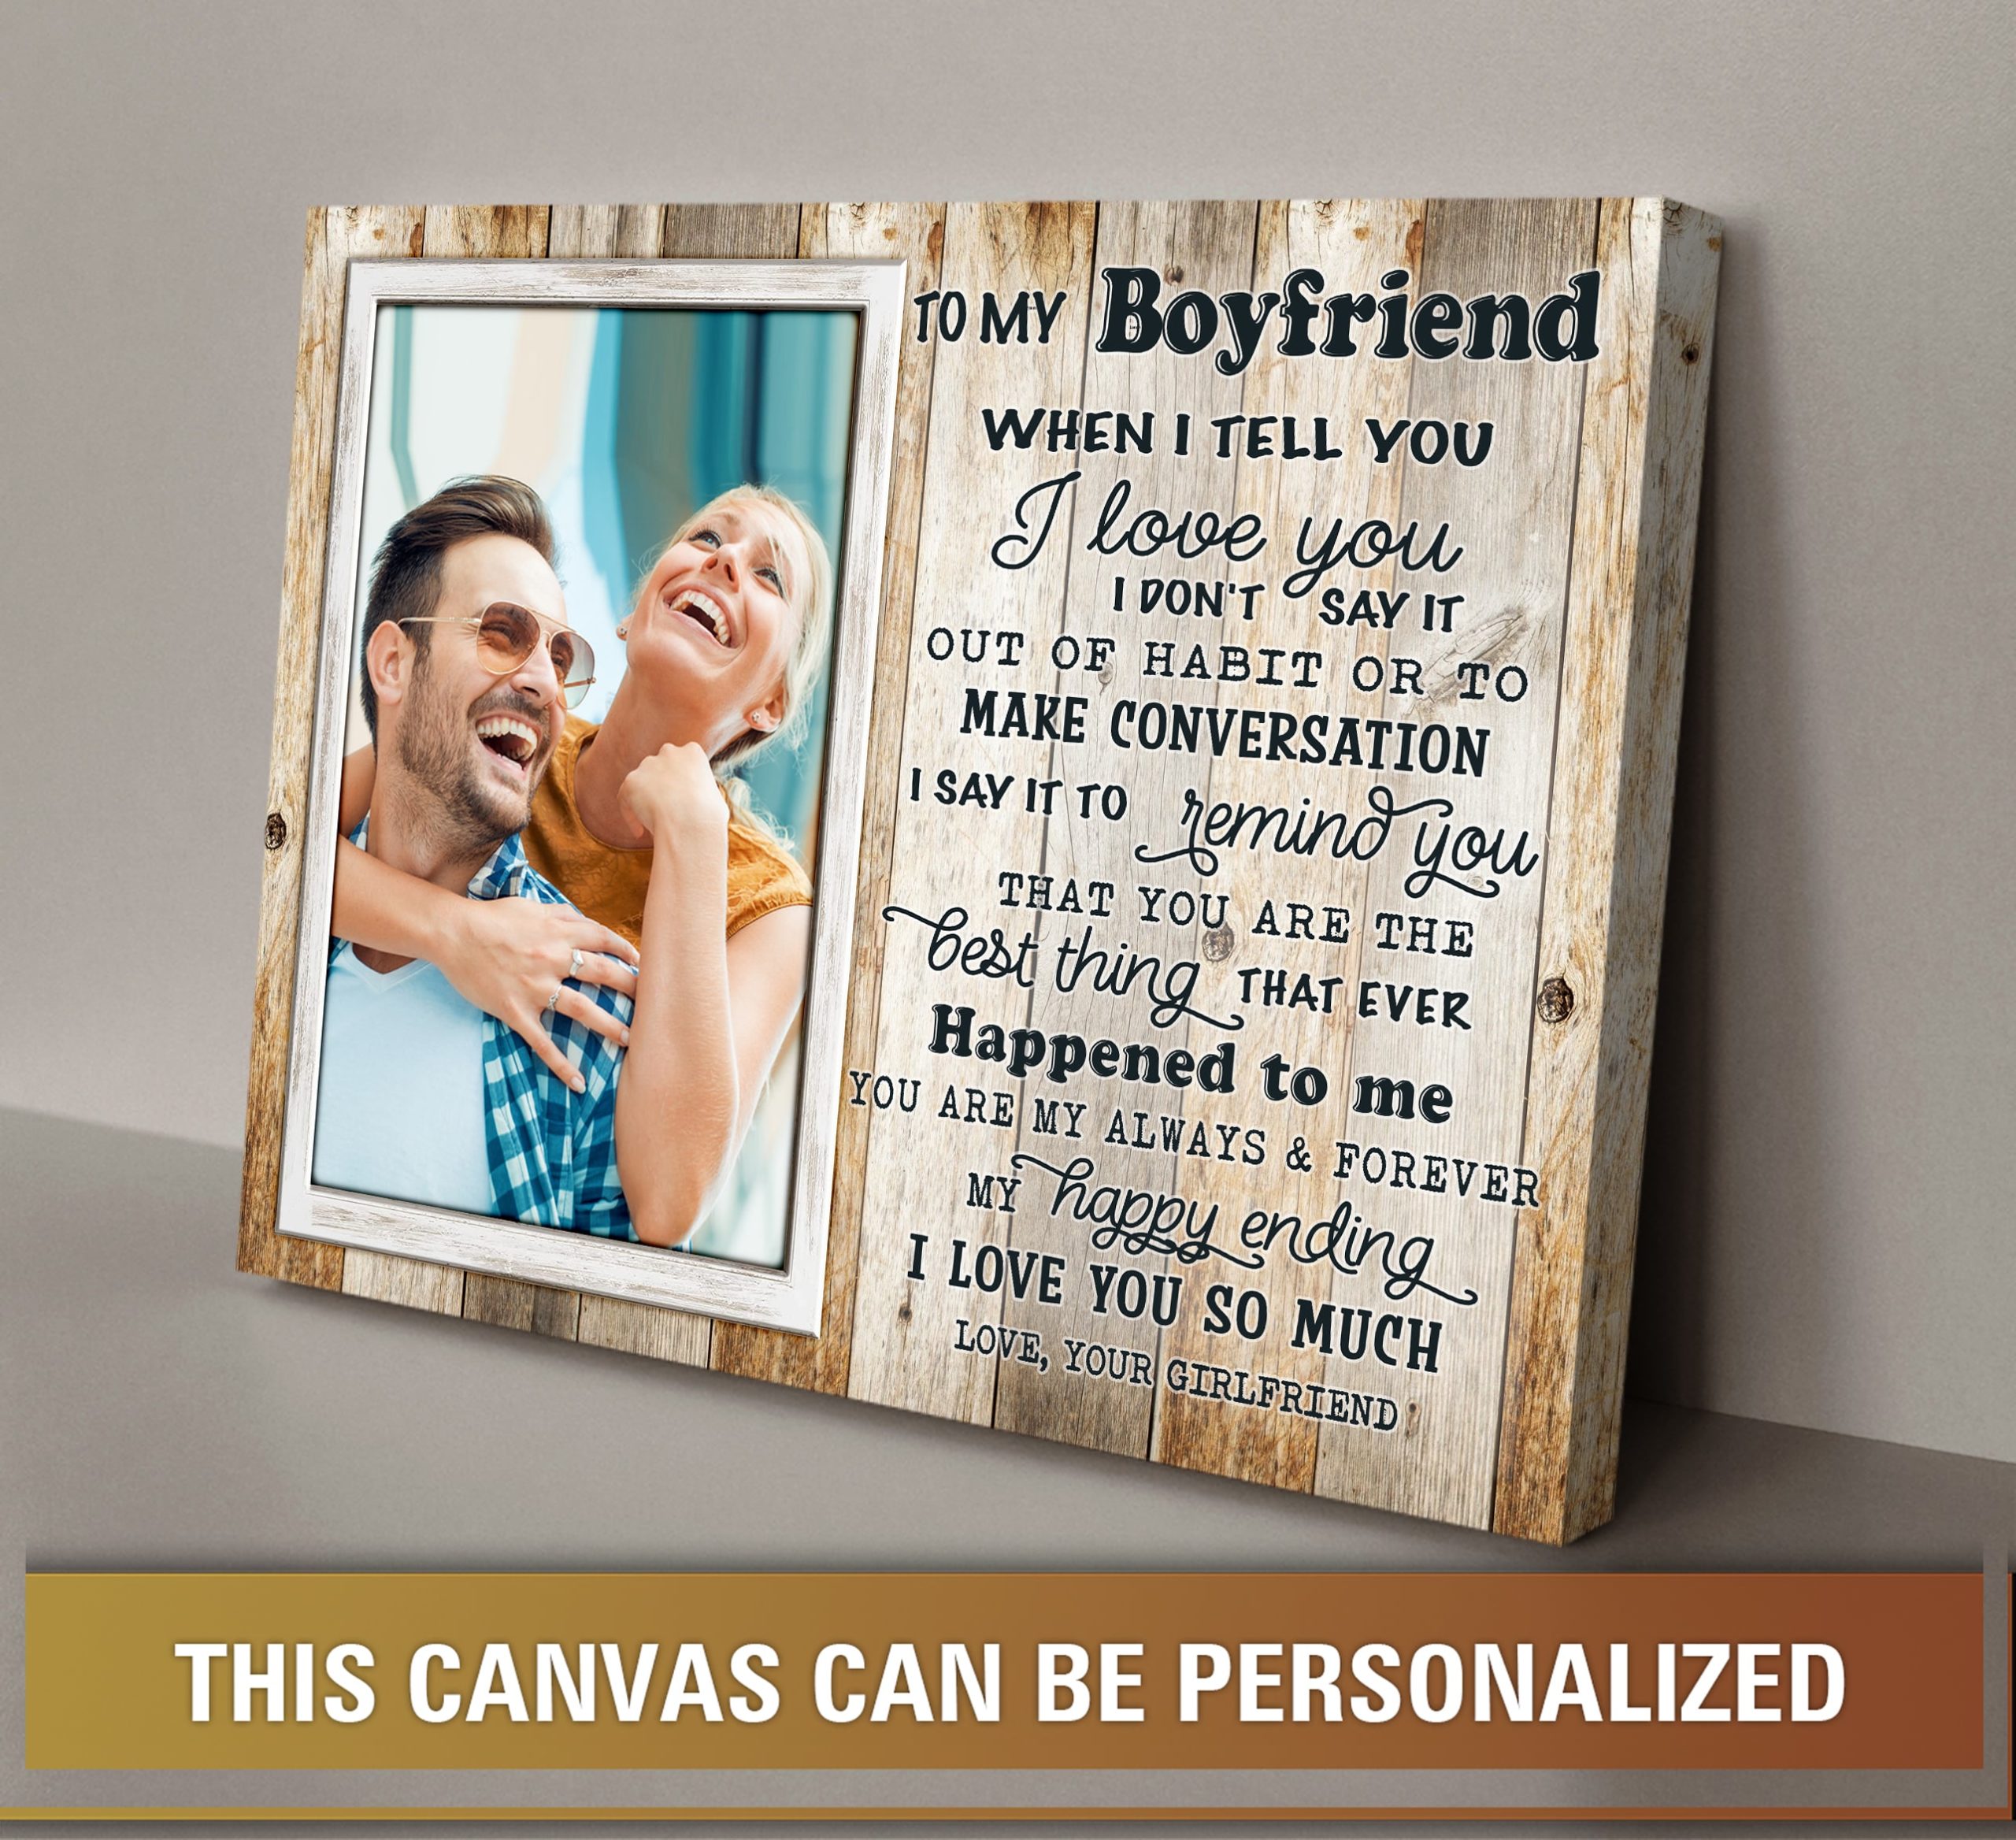 Unique & Creative Gifts for your Boyfriend